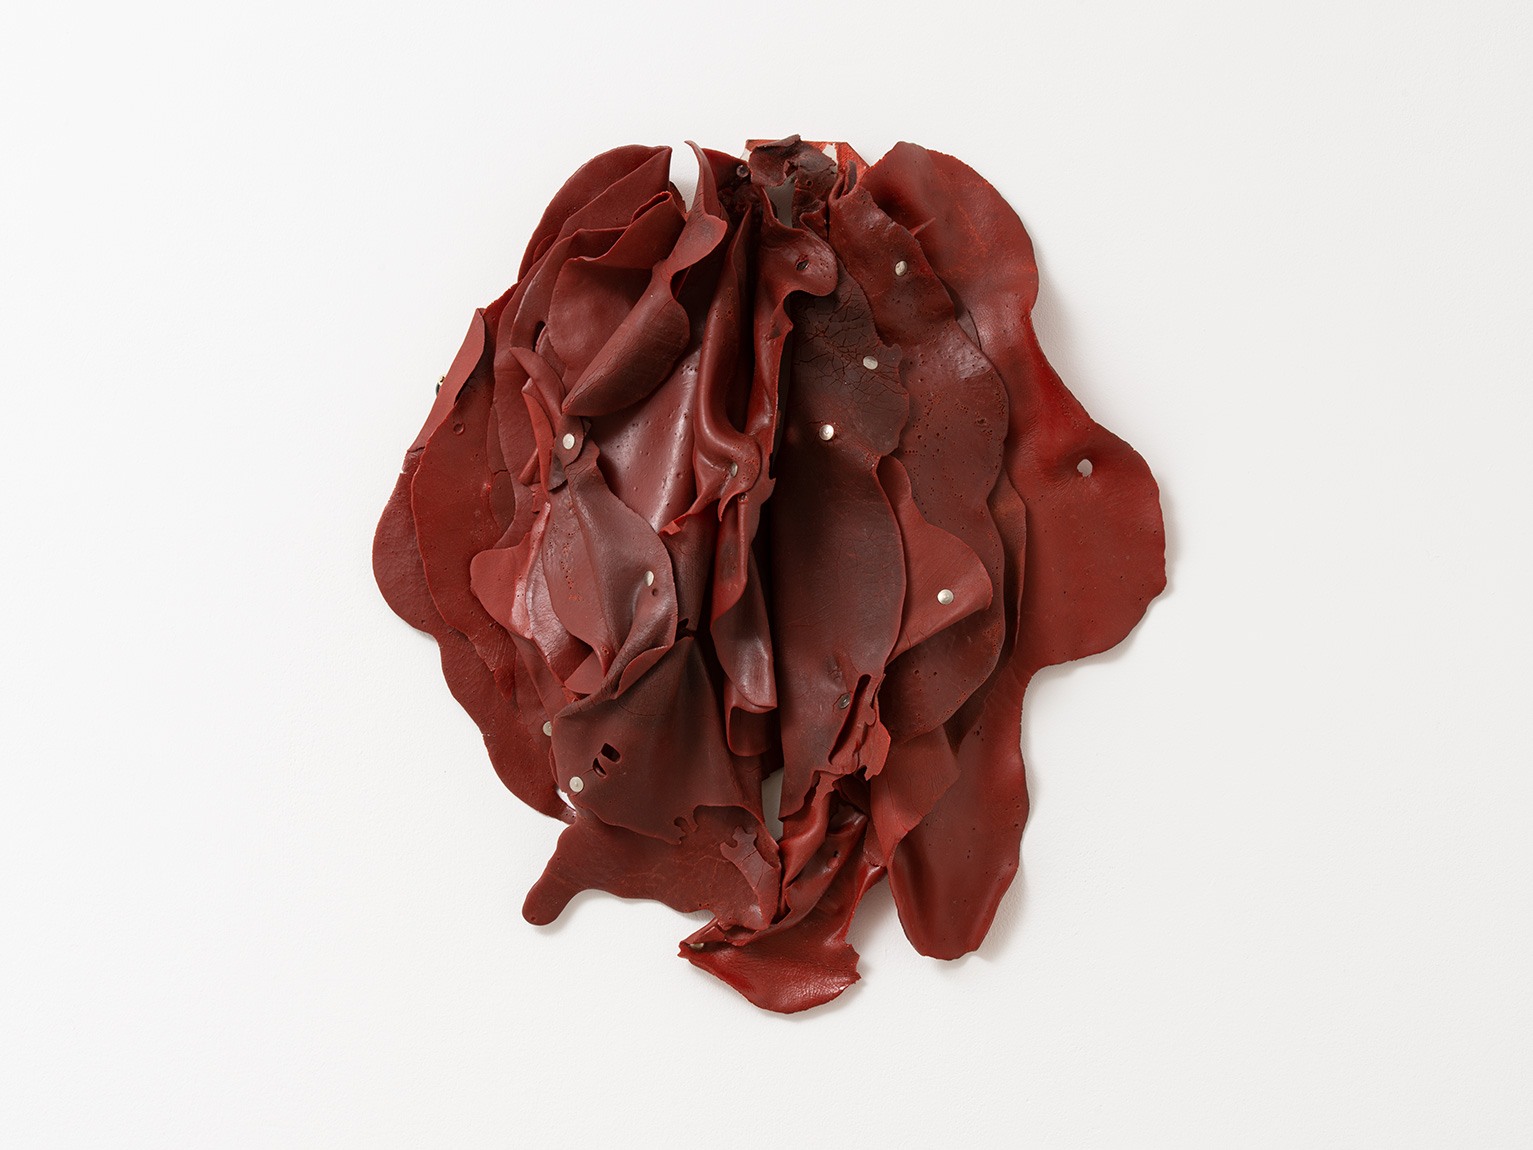 Hannah Wilke's untitled, red, latex sculpture.